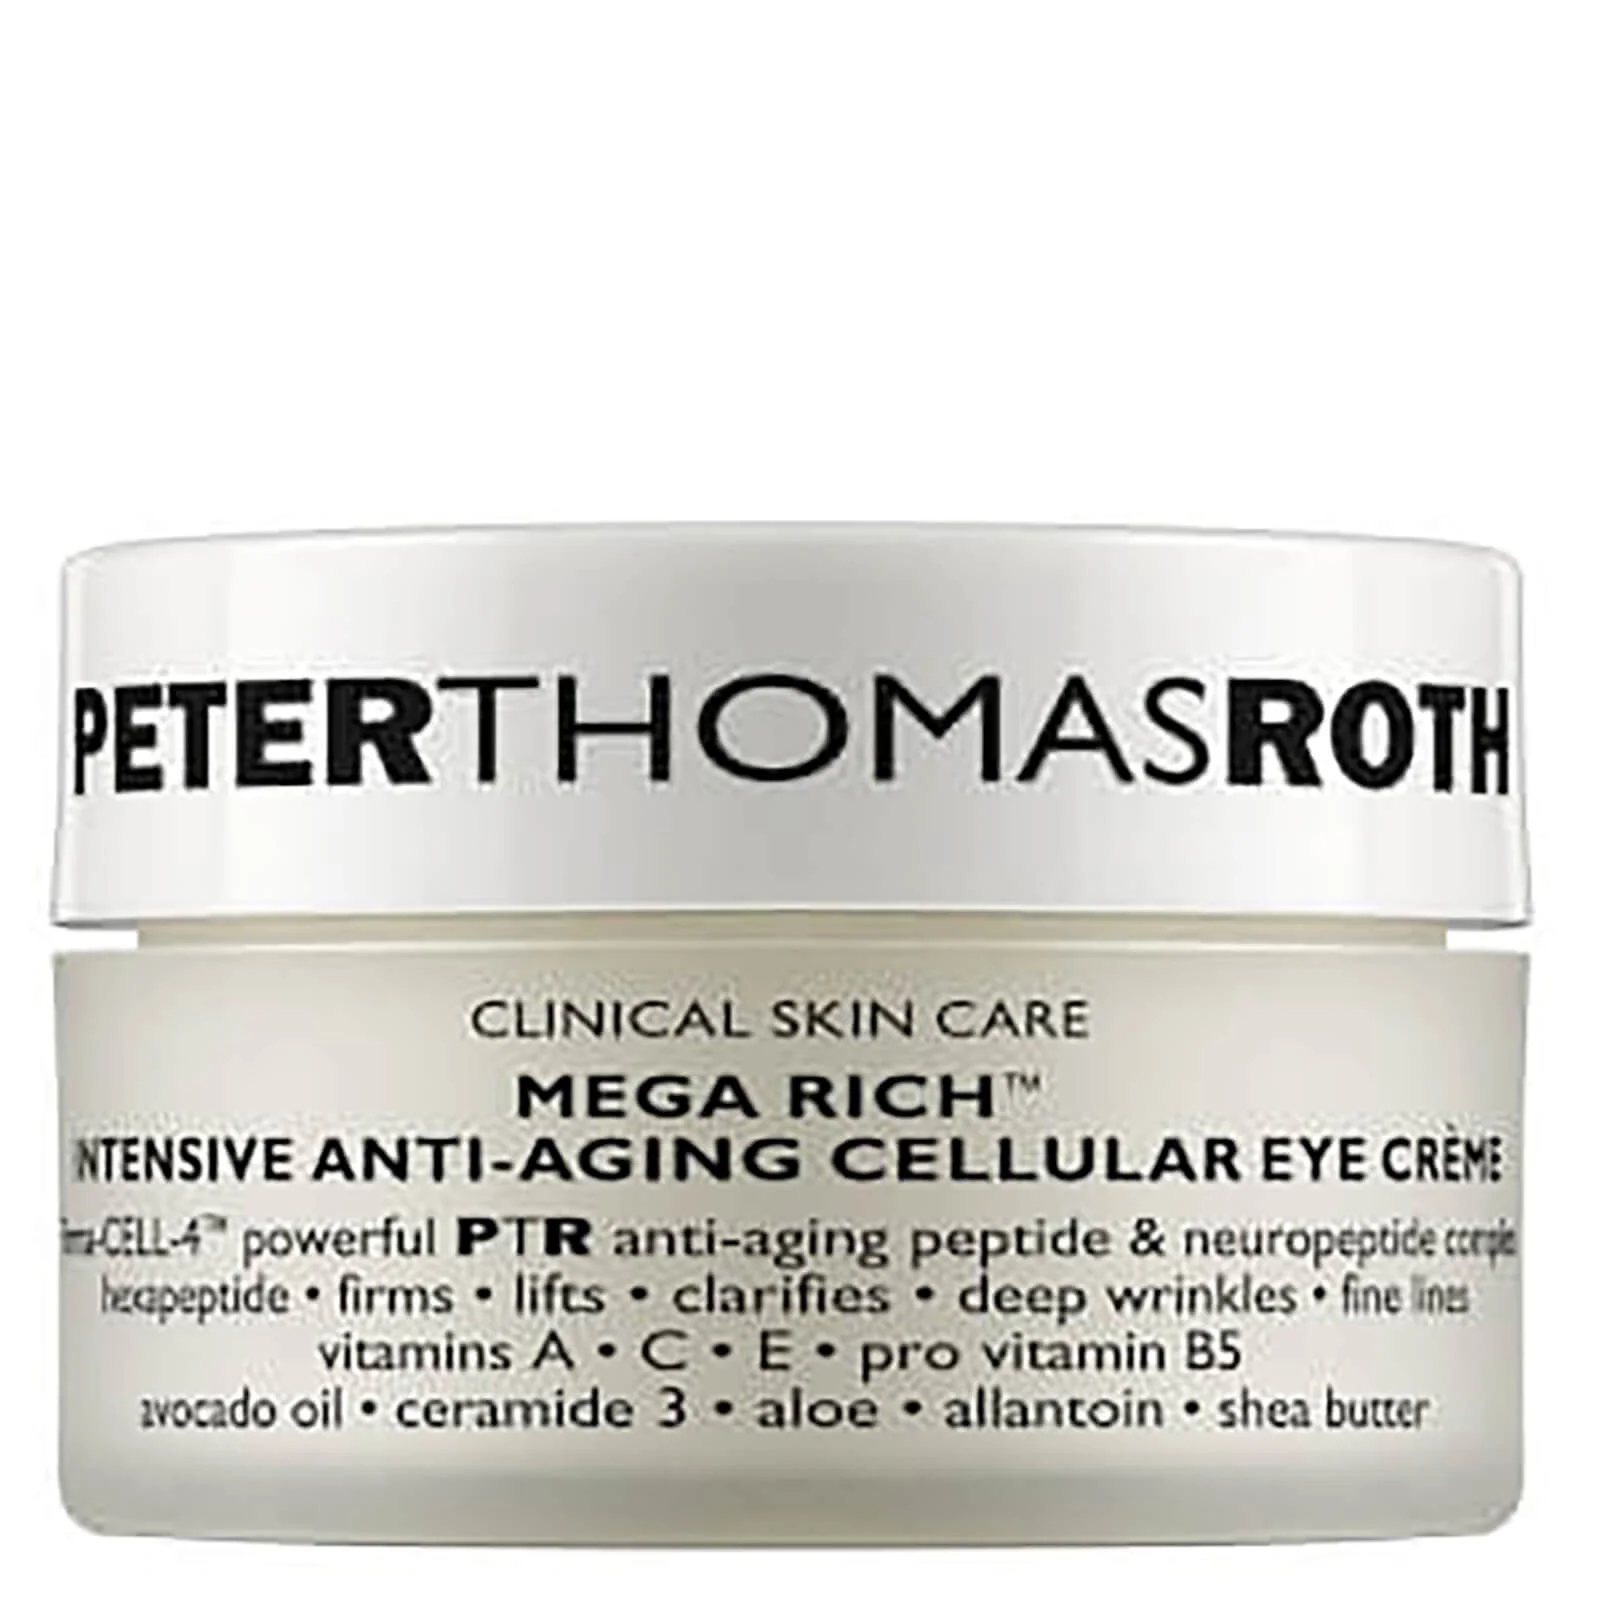 Peter Thomas Roth Mega Rich Intensive Anti-ageing Cellular Eye Cream (22g) Image 1